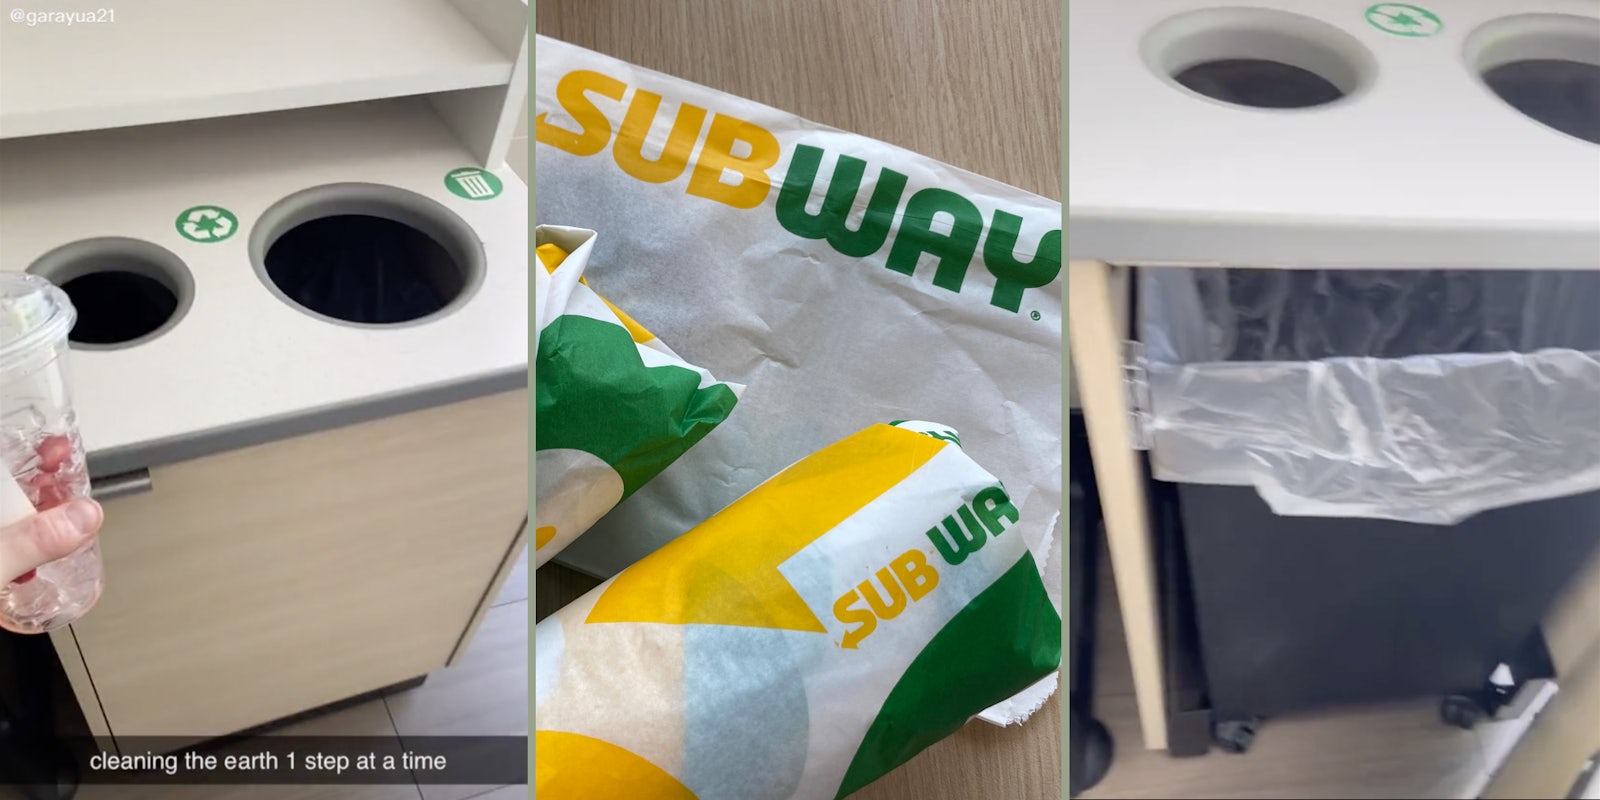 Recycling and trash bin (L,R) Subway sandwich (M)